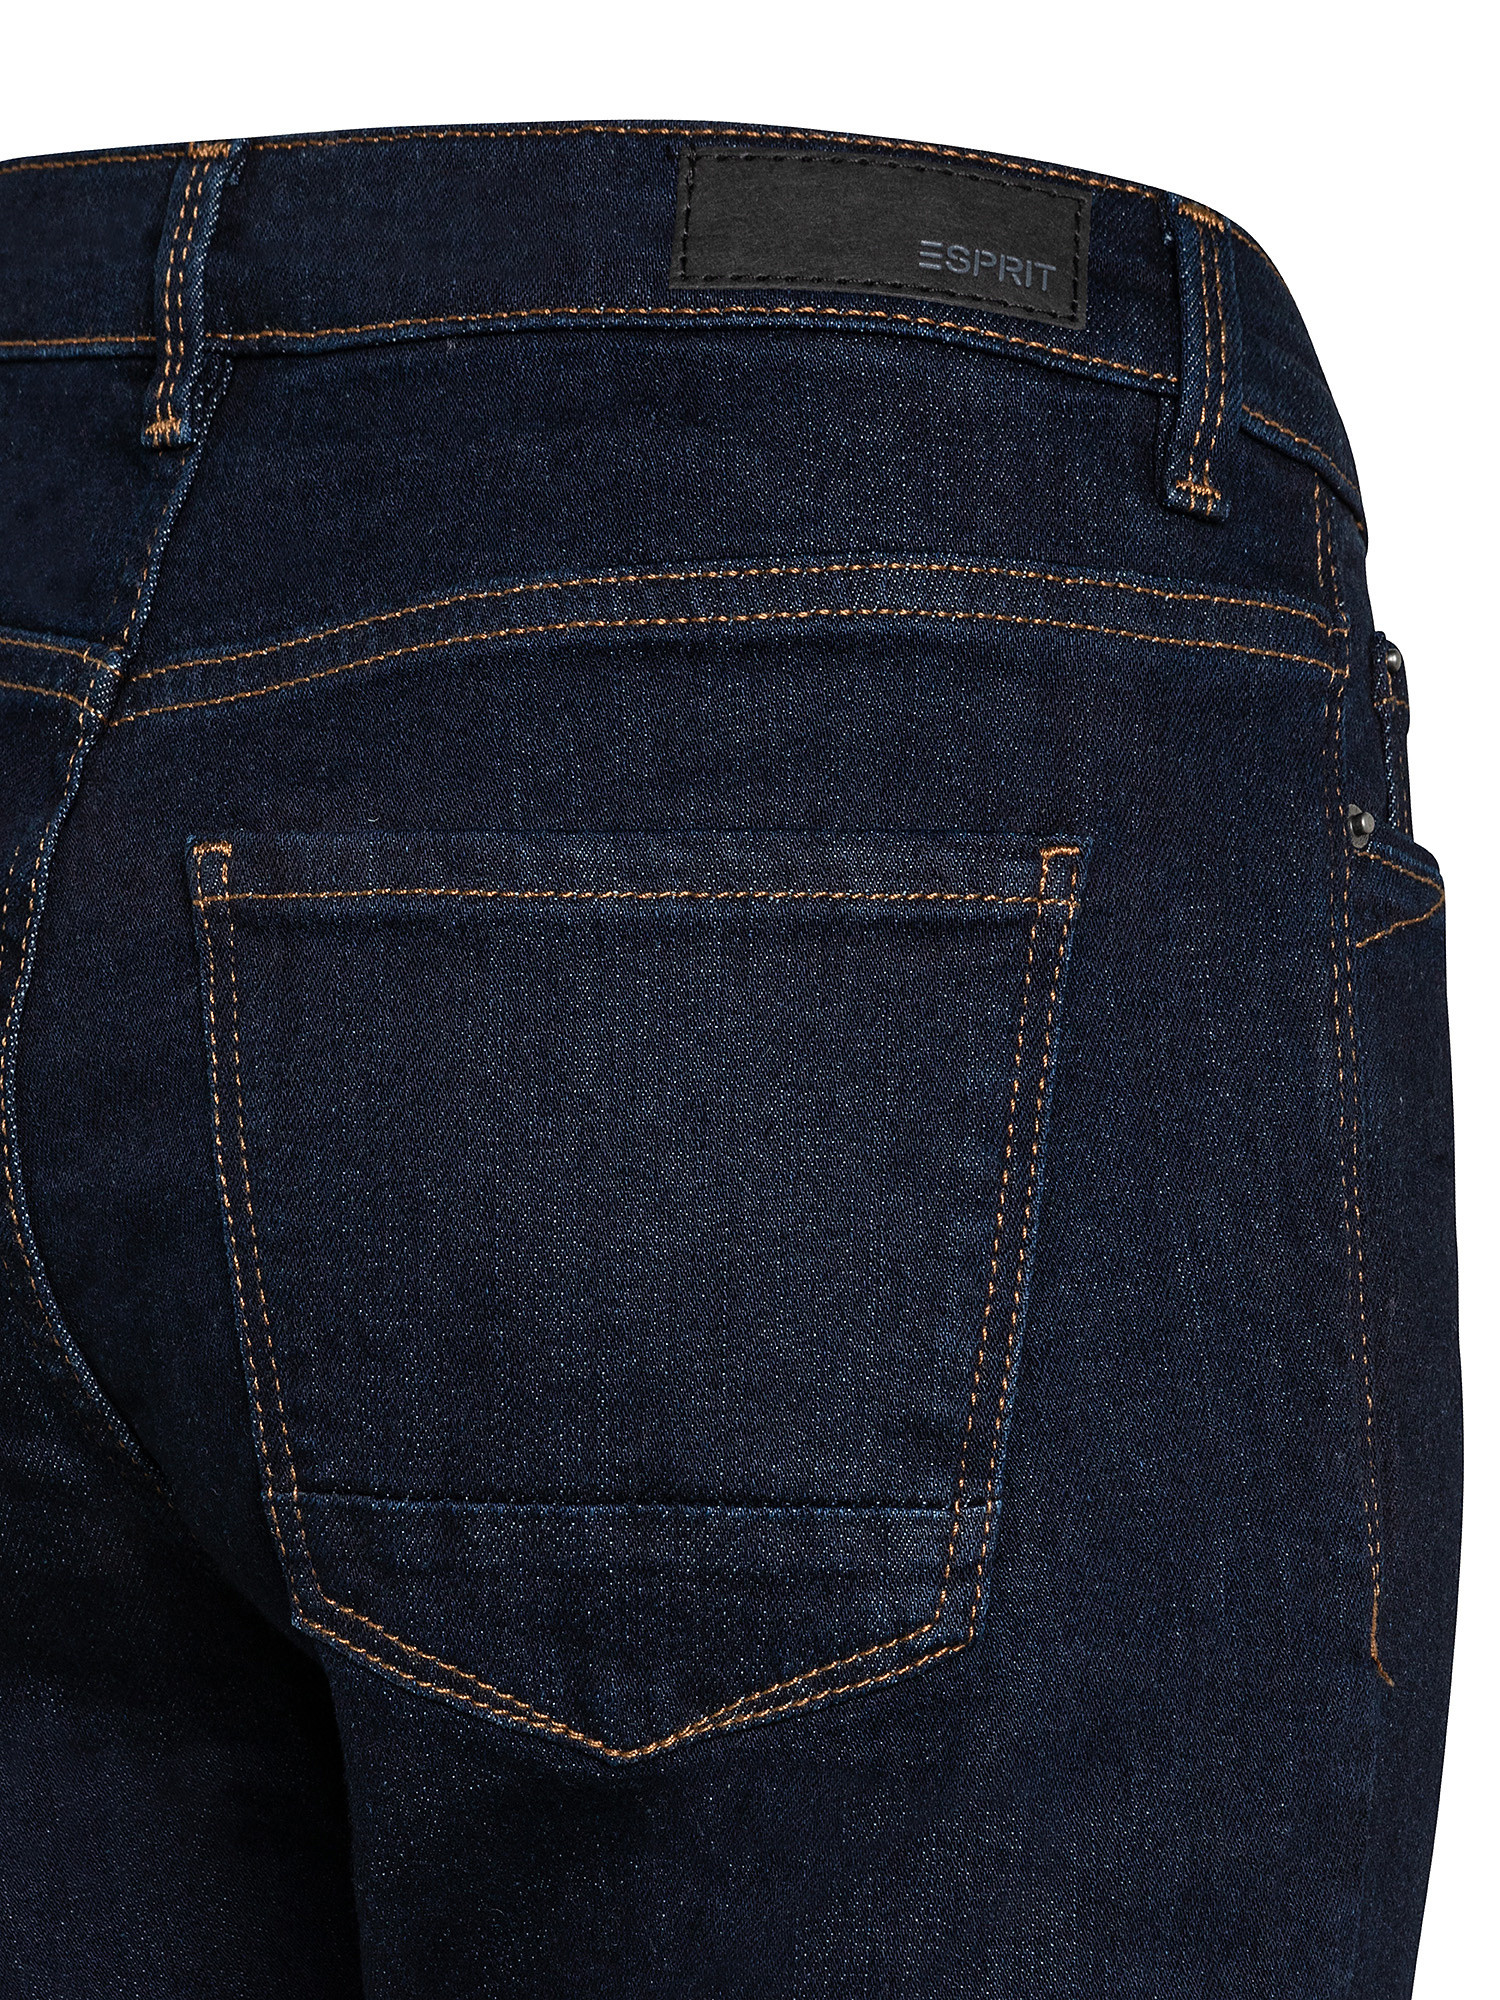 Jeans super stretch con cotone biologico, Denim, large image number 2